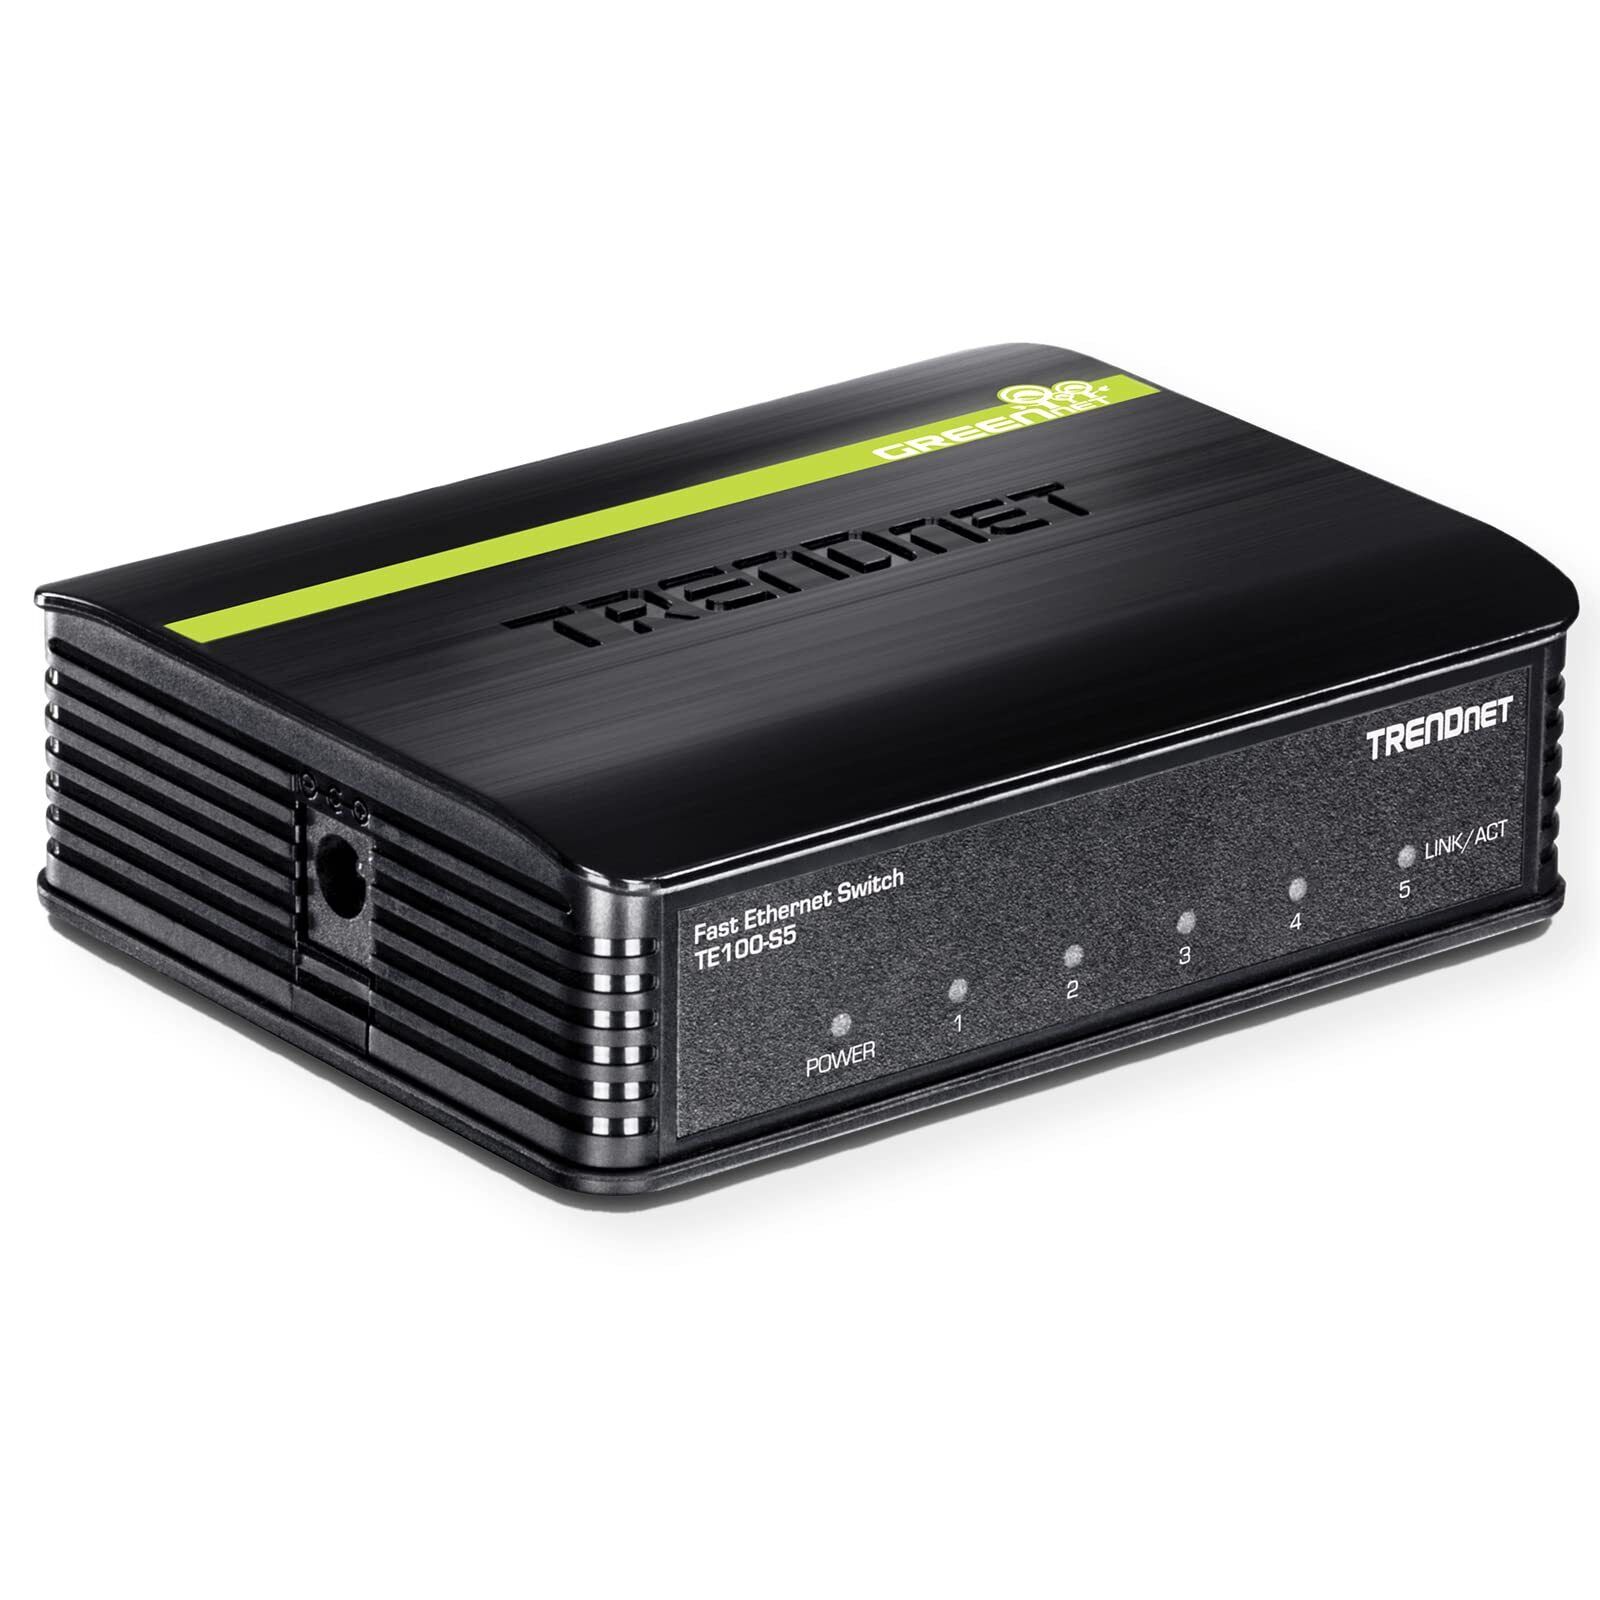 TRENDnet TE100-S5 5-Port Unverwaltet 10/100 Mbps GREENnet Ethernet Desktop Plast